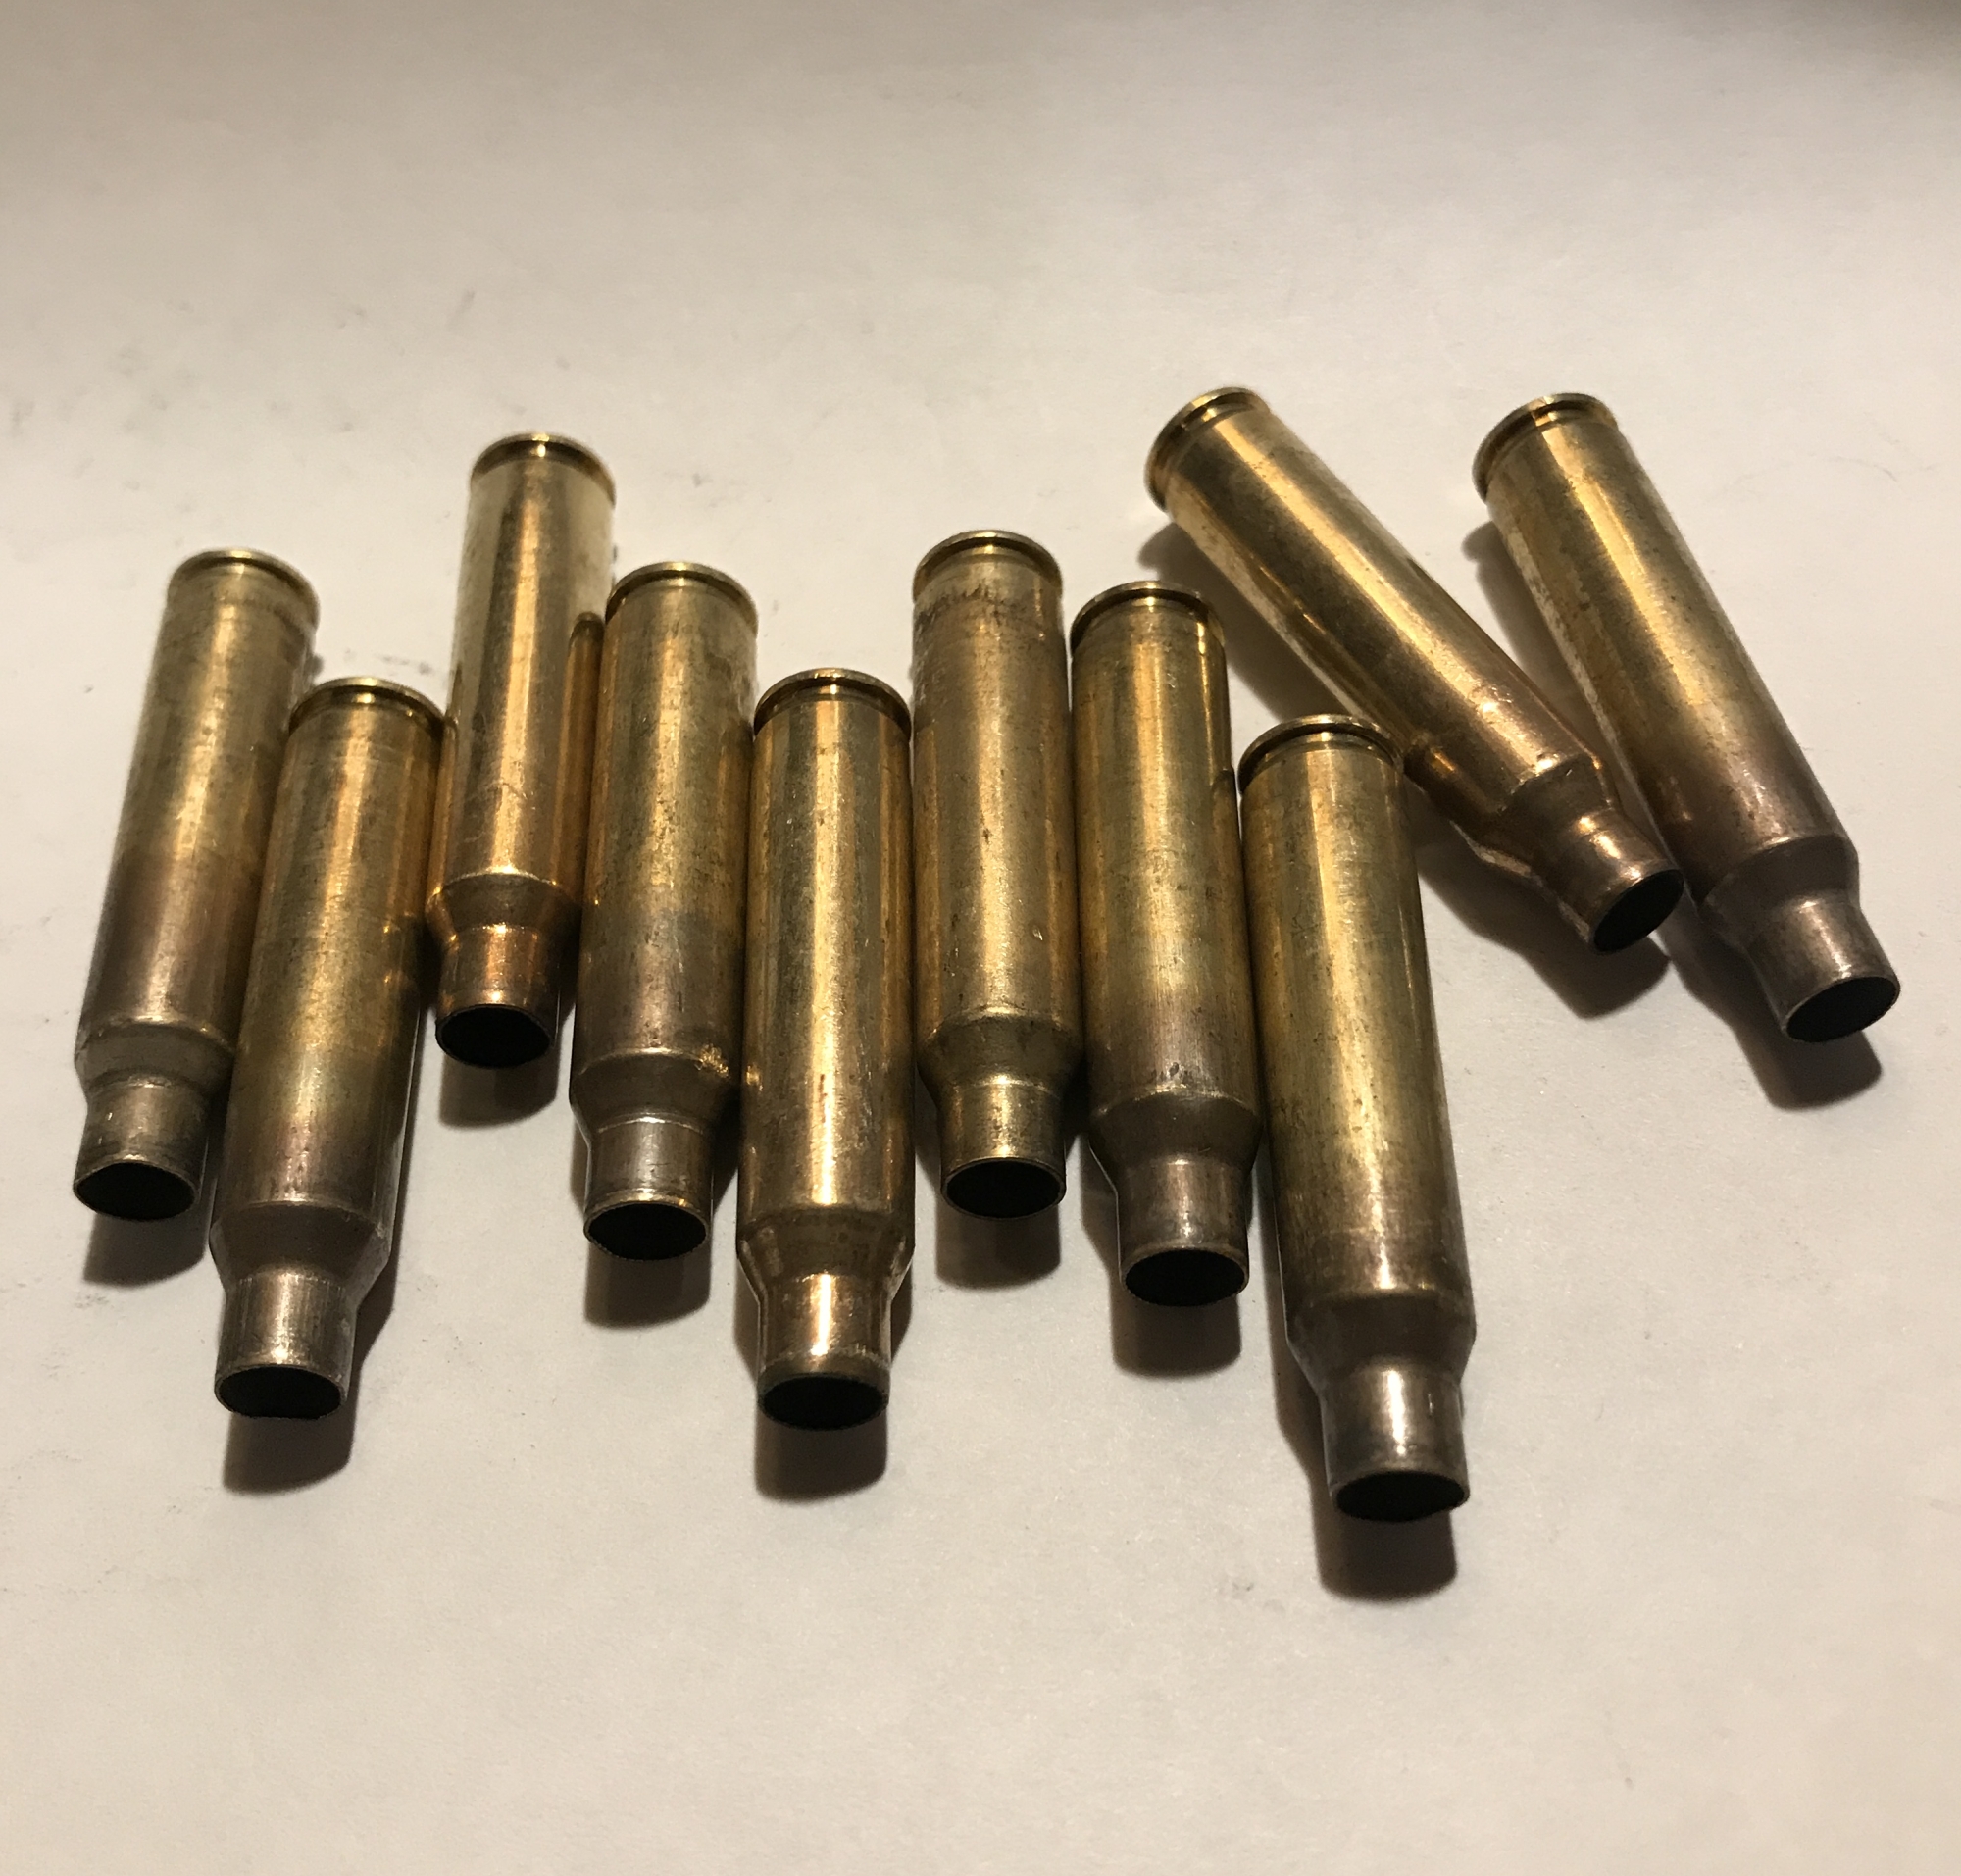 Brass Cartridge Cases 5.56mm NATO